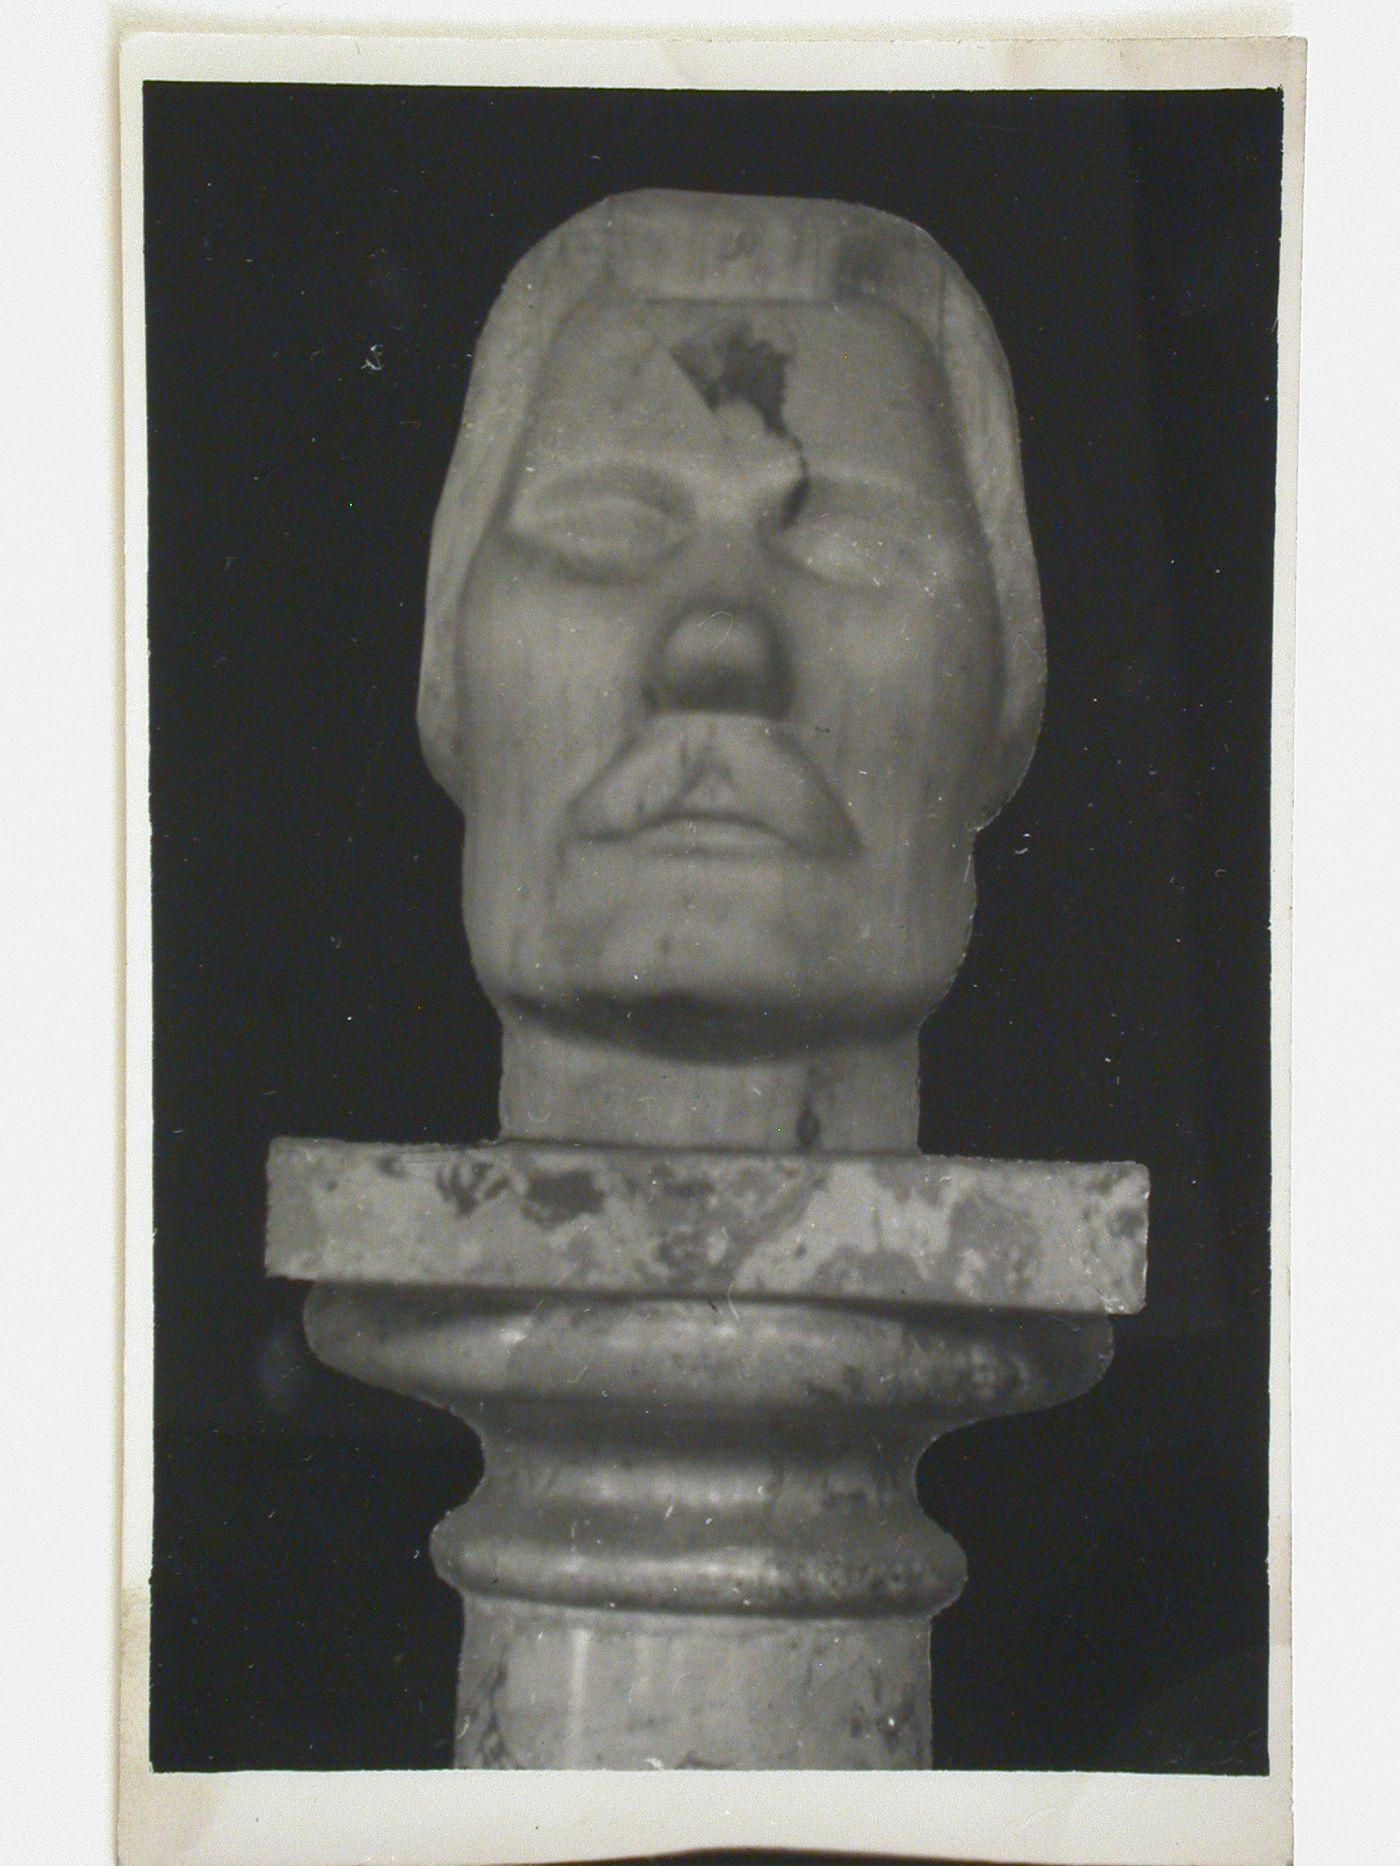 View of a sculpted head of Maxim Gorki, Soviet Union